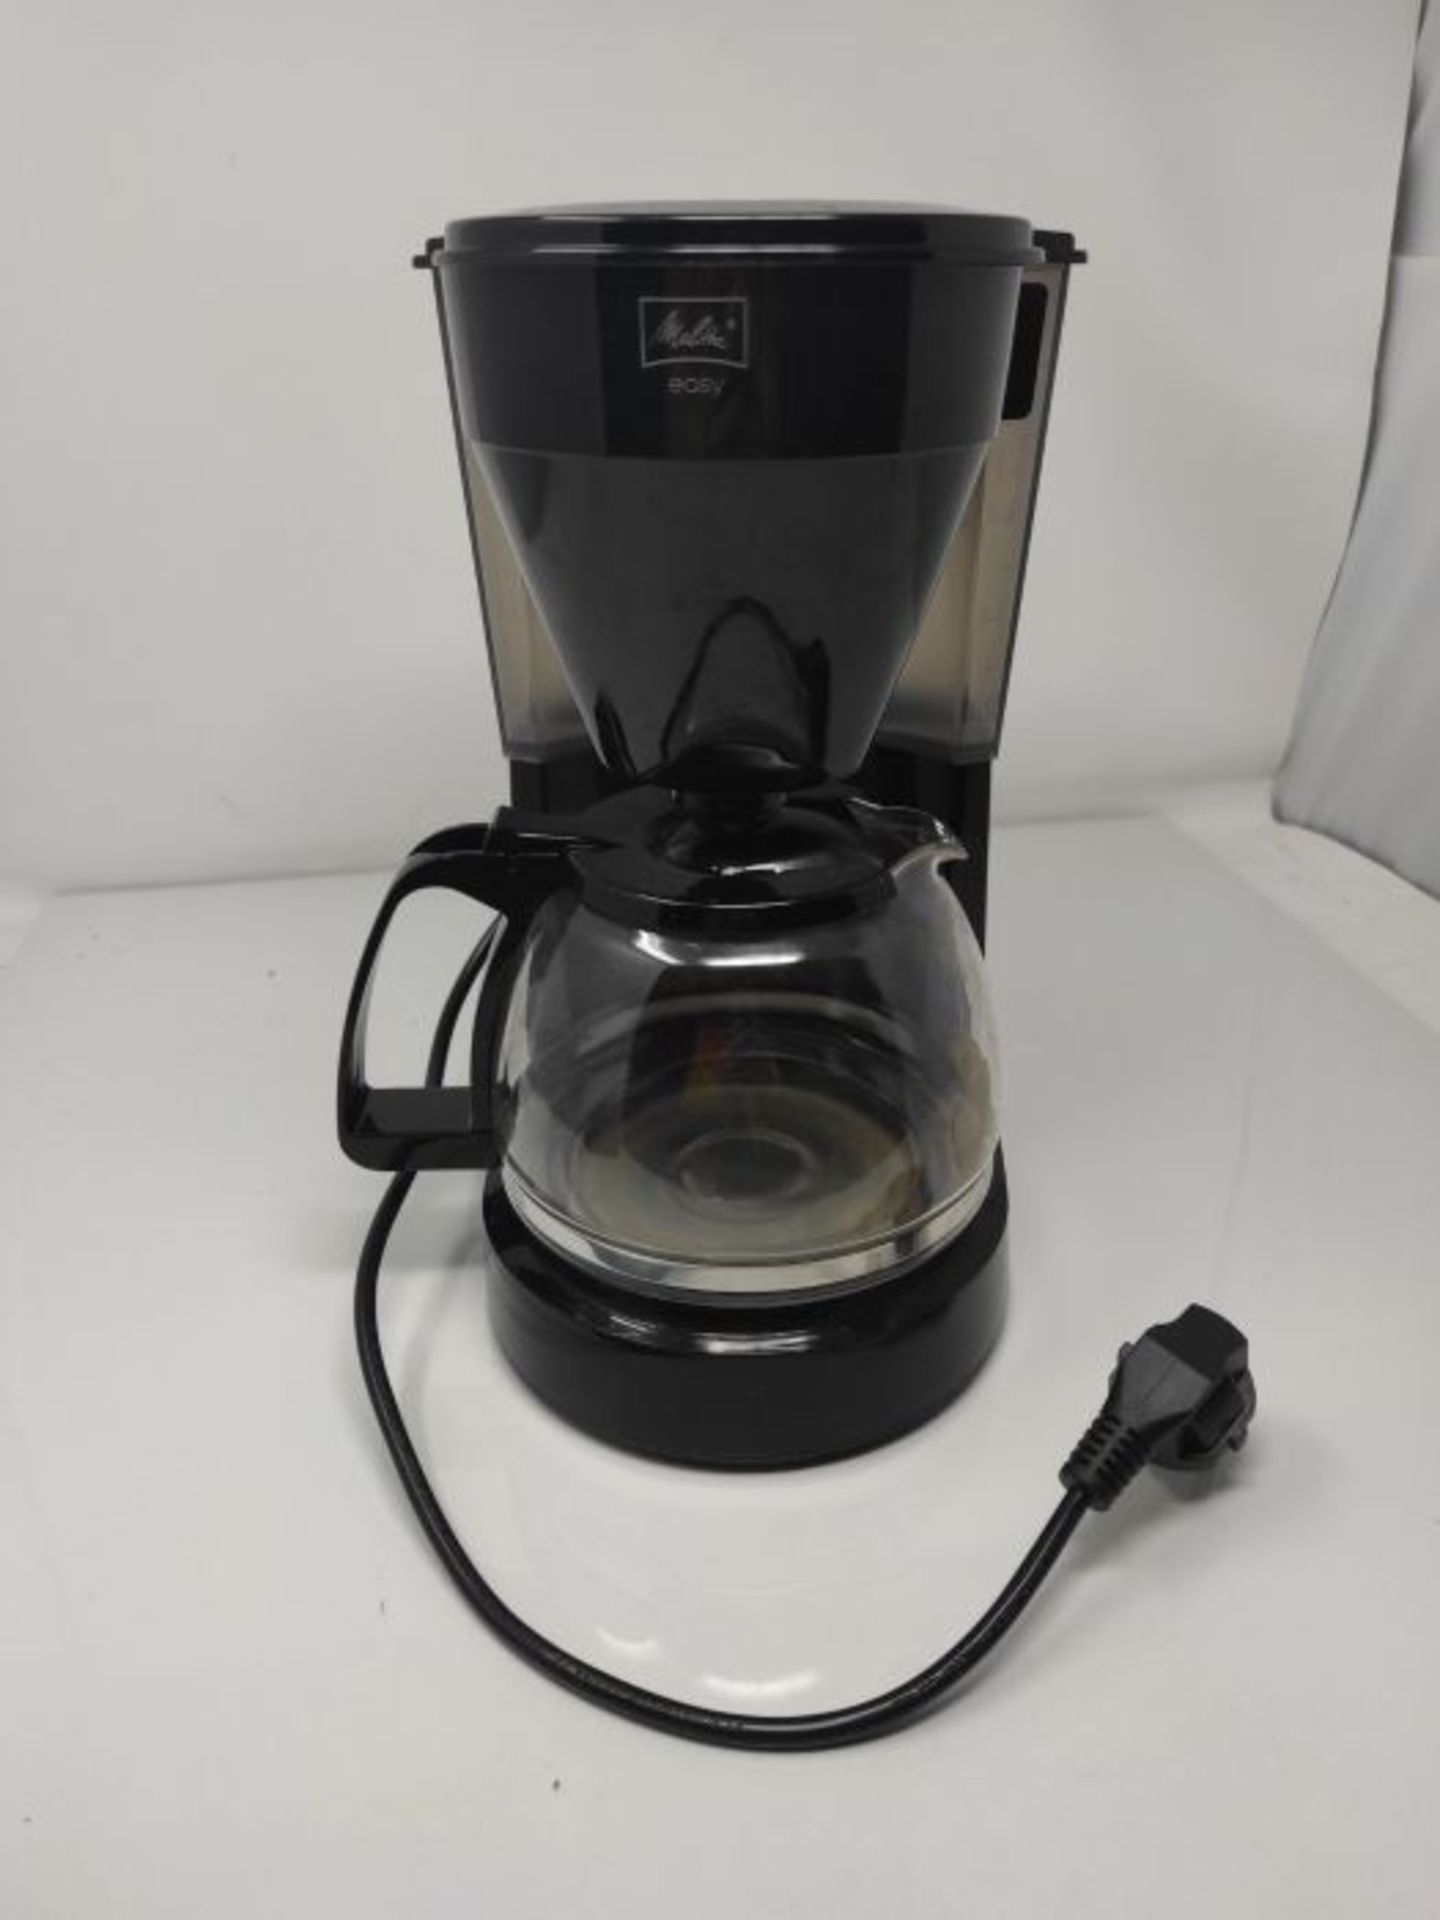 Melitta Filter Coffee Machine with Glass Jug, Easy II Model, 1023-02, Black, 6762887 - Image 3 of 3